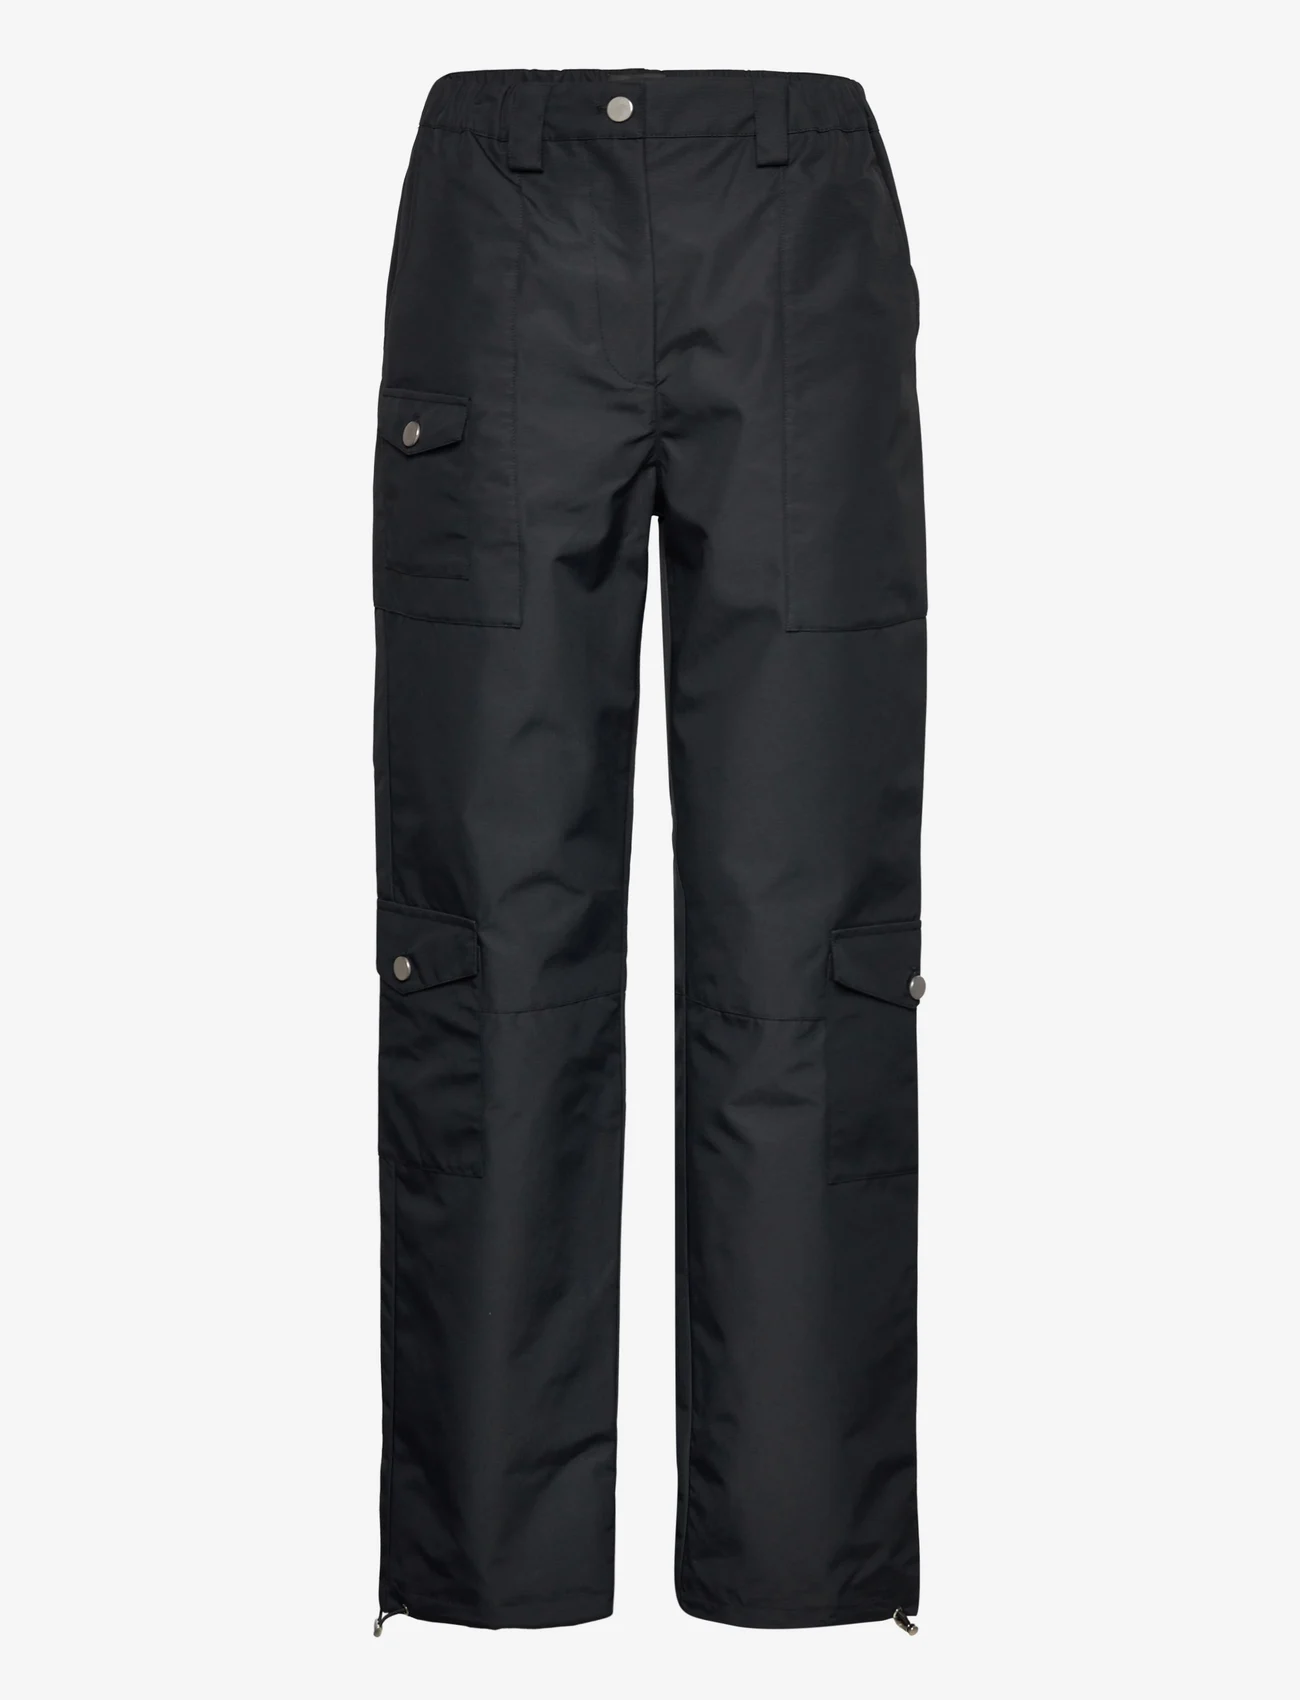 HAN Kjøbenhavn - Nylon Cargo Trousers - cargo pants - black - 0